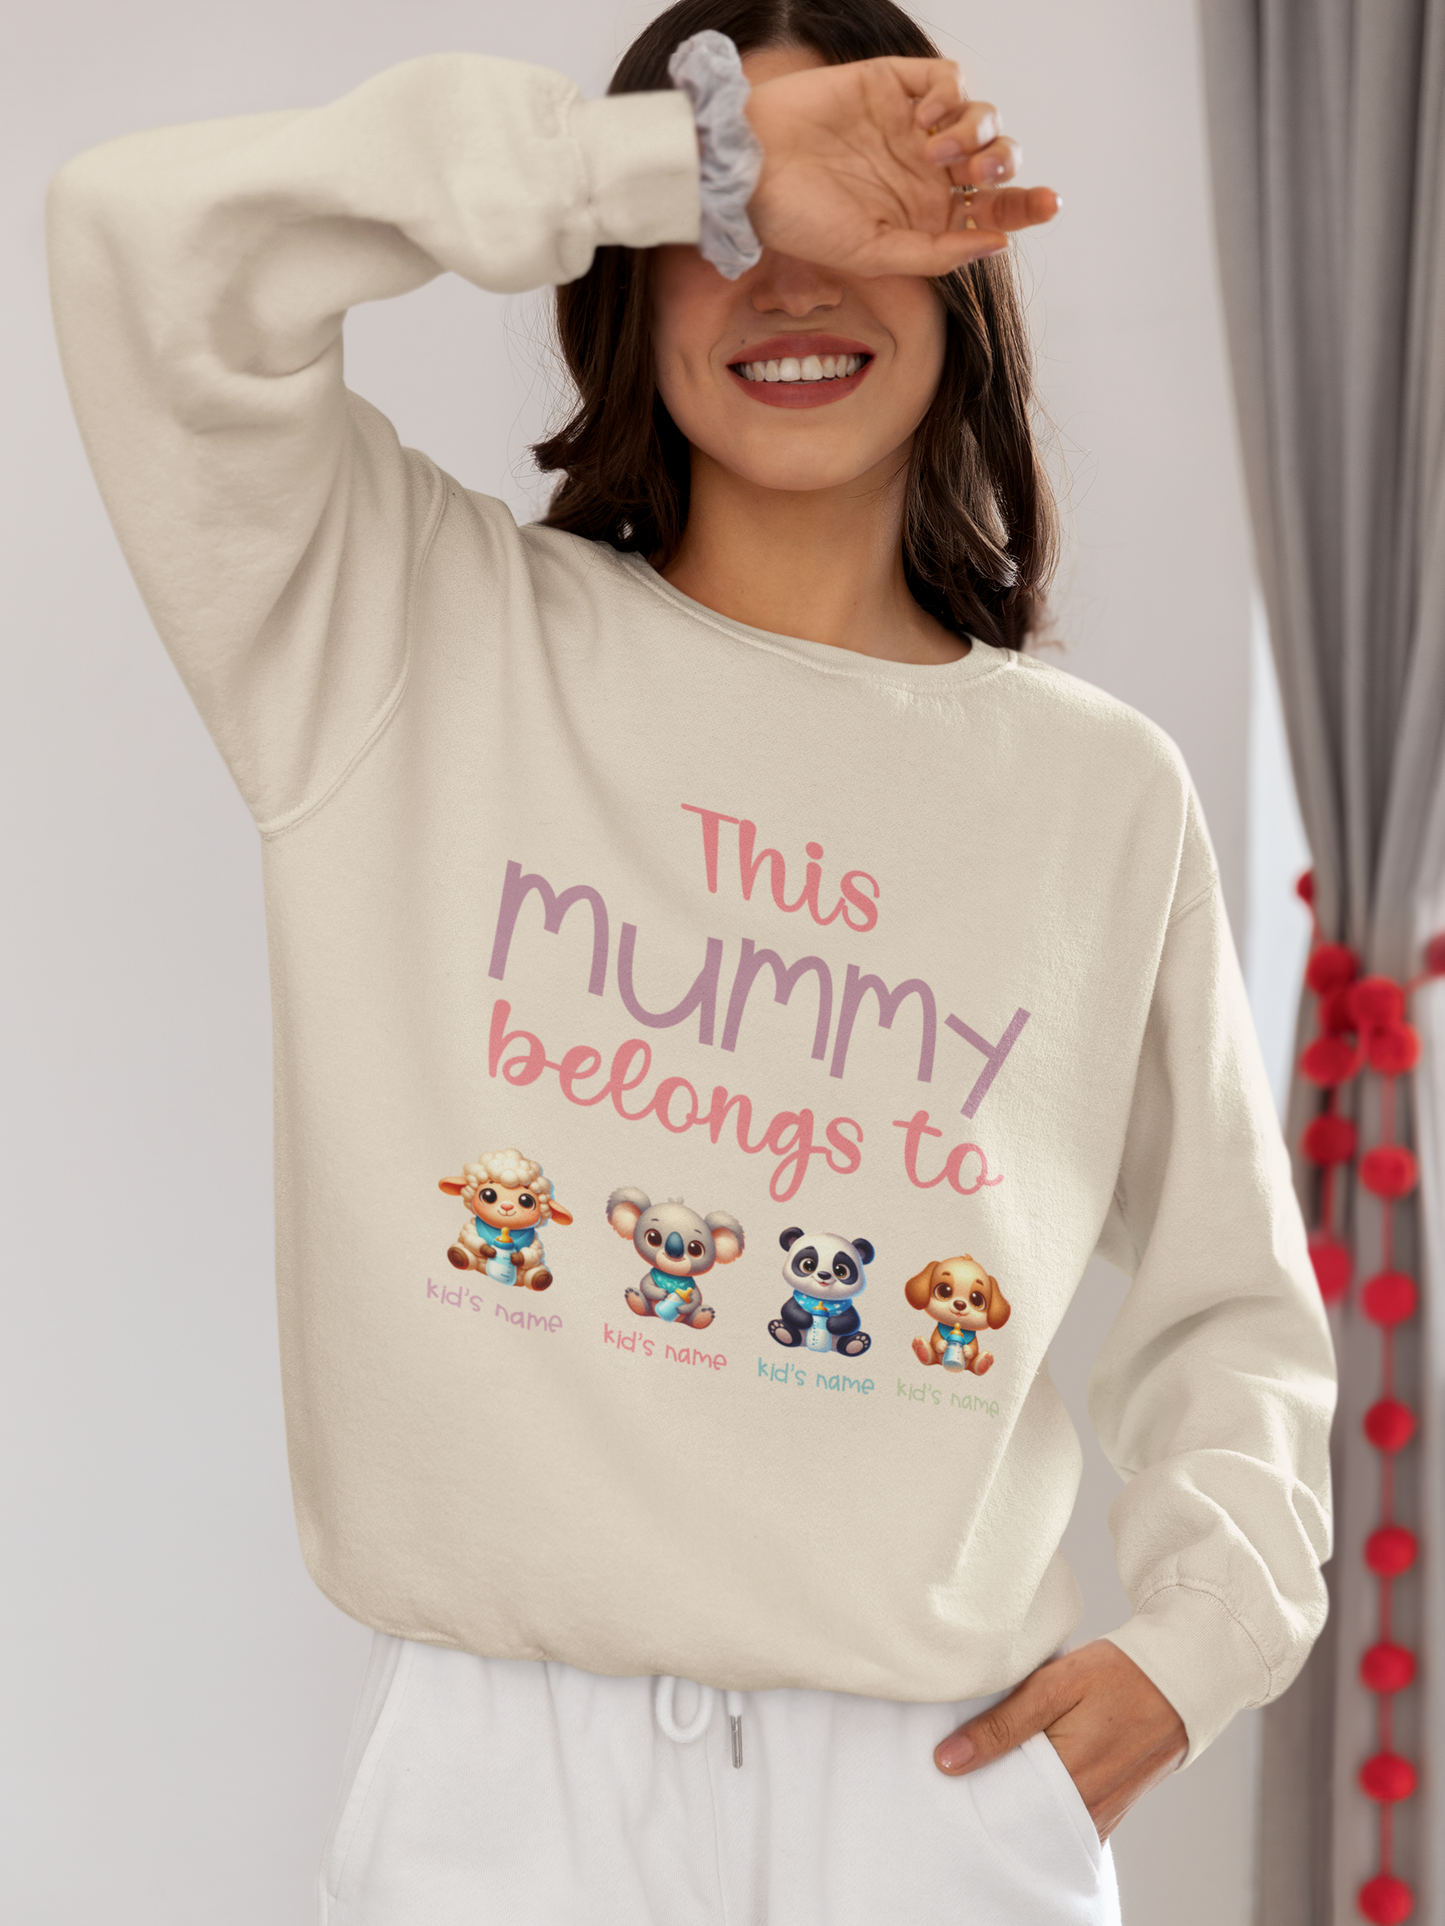 This Mummy Belongs To Shirt, Personalized Mother's Day Shirt, Cute Animals Clipart Shirt, Personalized Animals Shirt, Meaningful Quote Mother's Day Shirt, Custom Name Shirt, Best Gift Idea Shirt For Mother's Day, Mother's Day Shirt